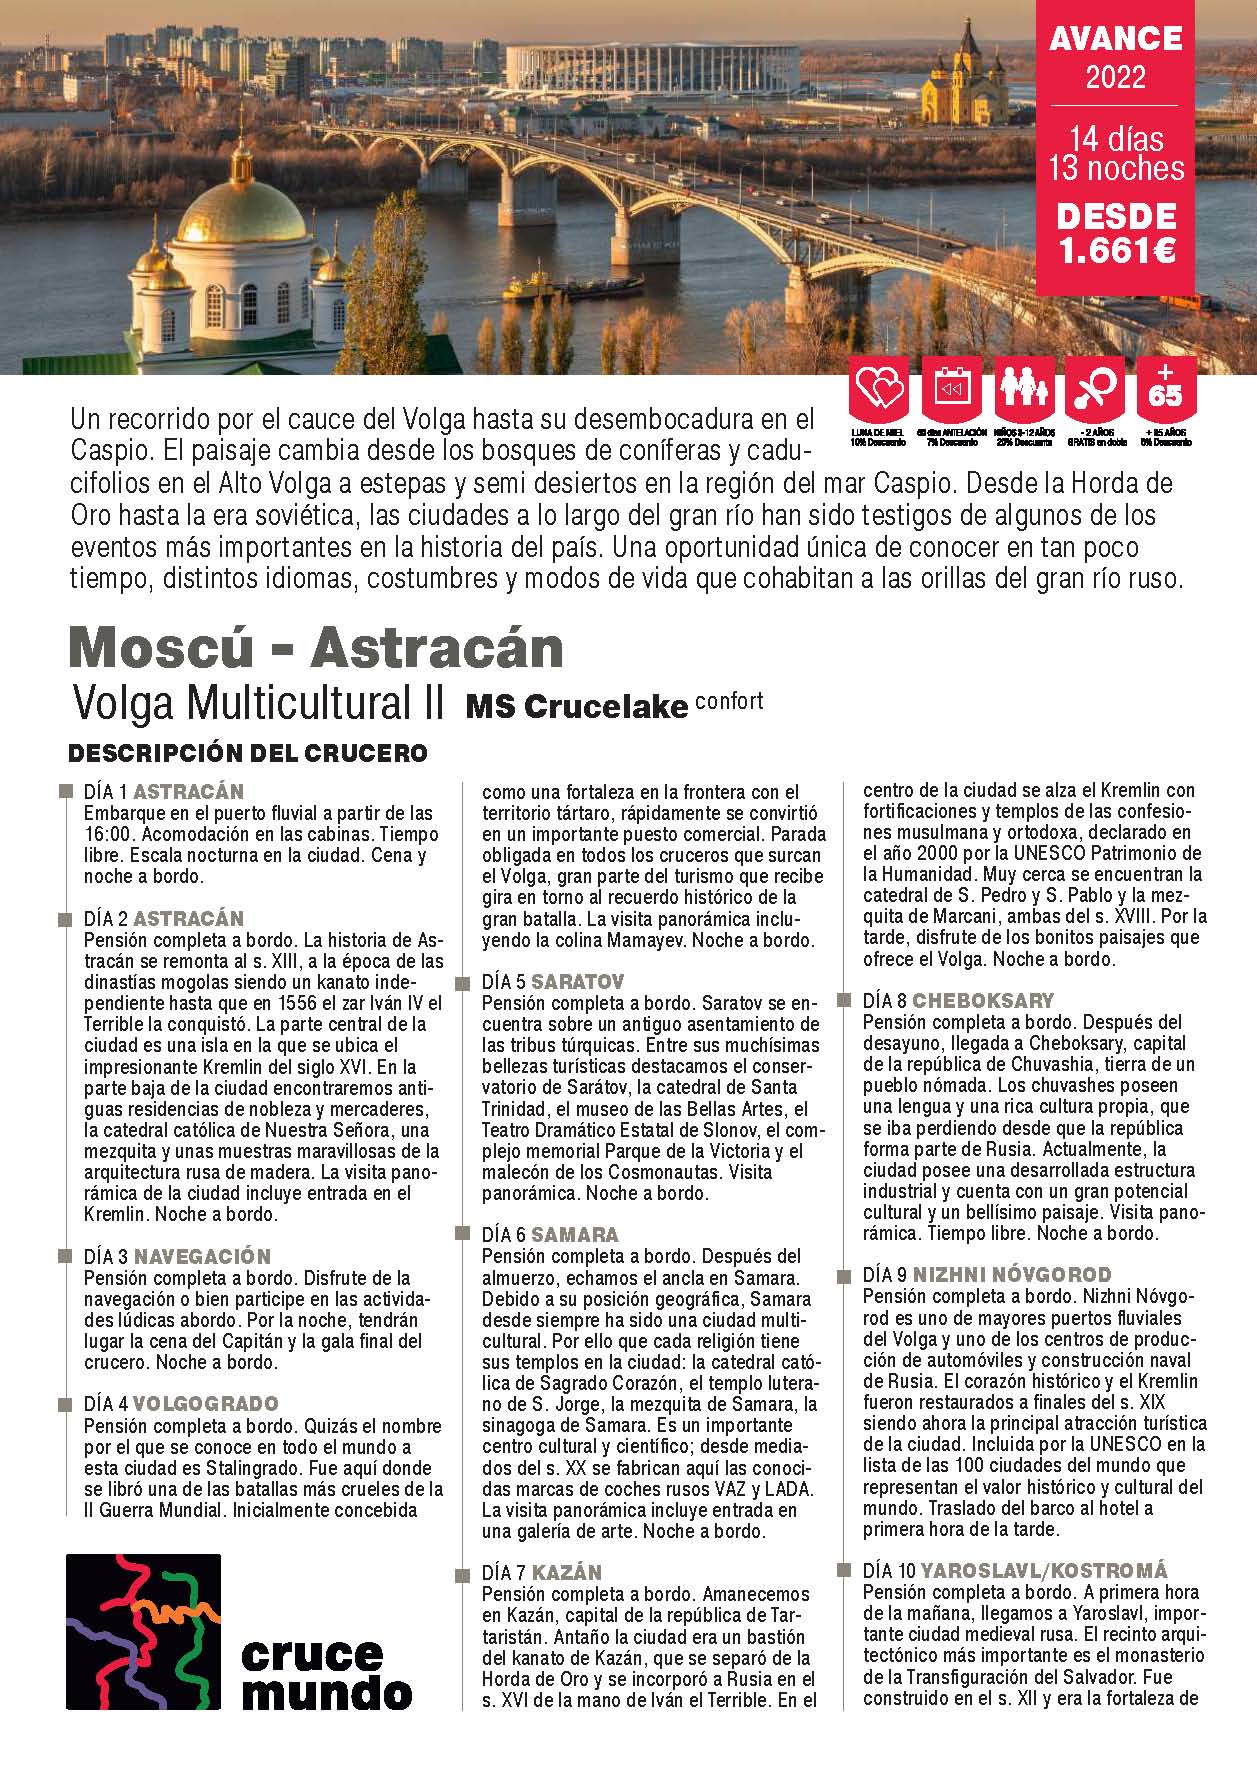 Oferta Crucemundo Volga Multicultural II verano 2022 Moscu-Astracan